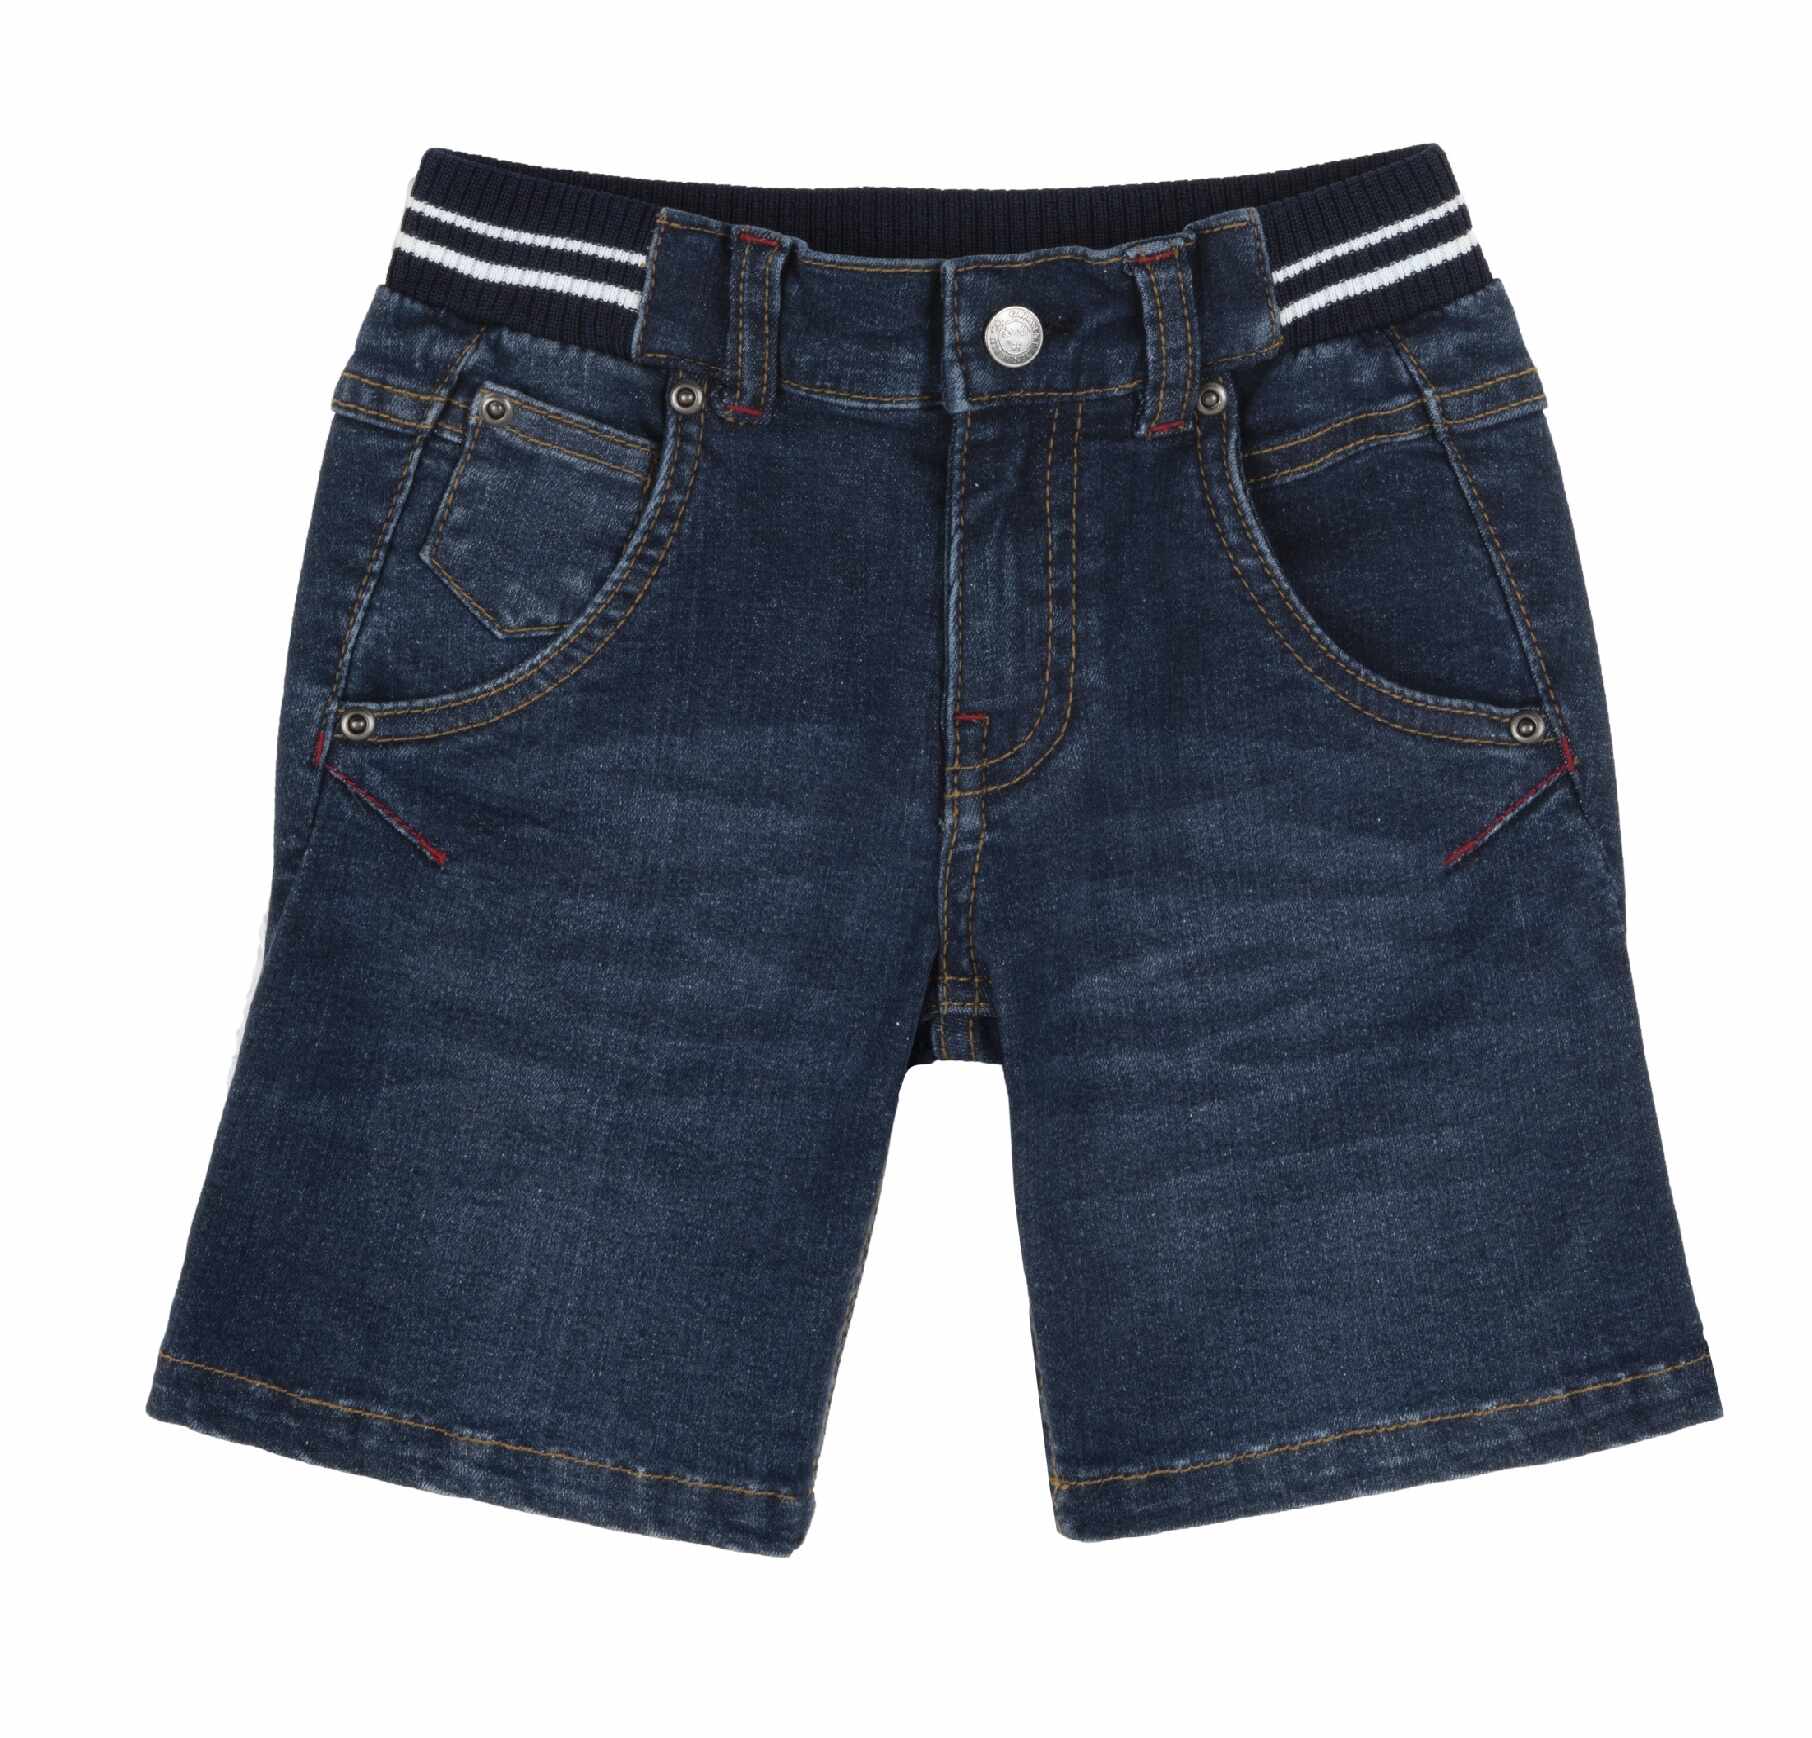 Pantaloni scurti copii Chicco, albastru inchis, 00484-62MC